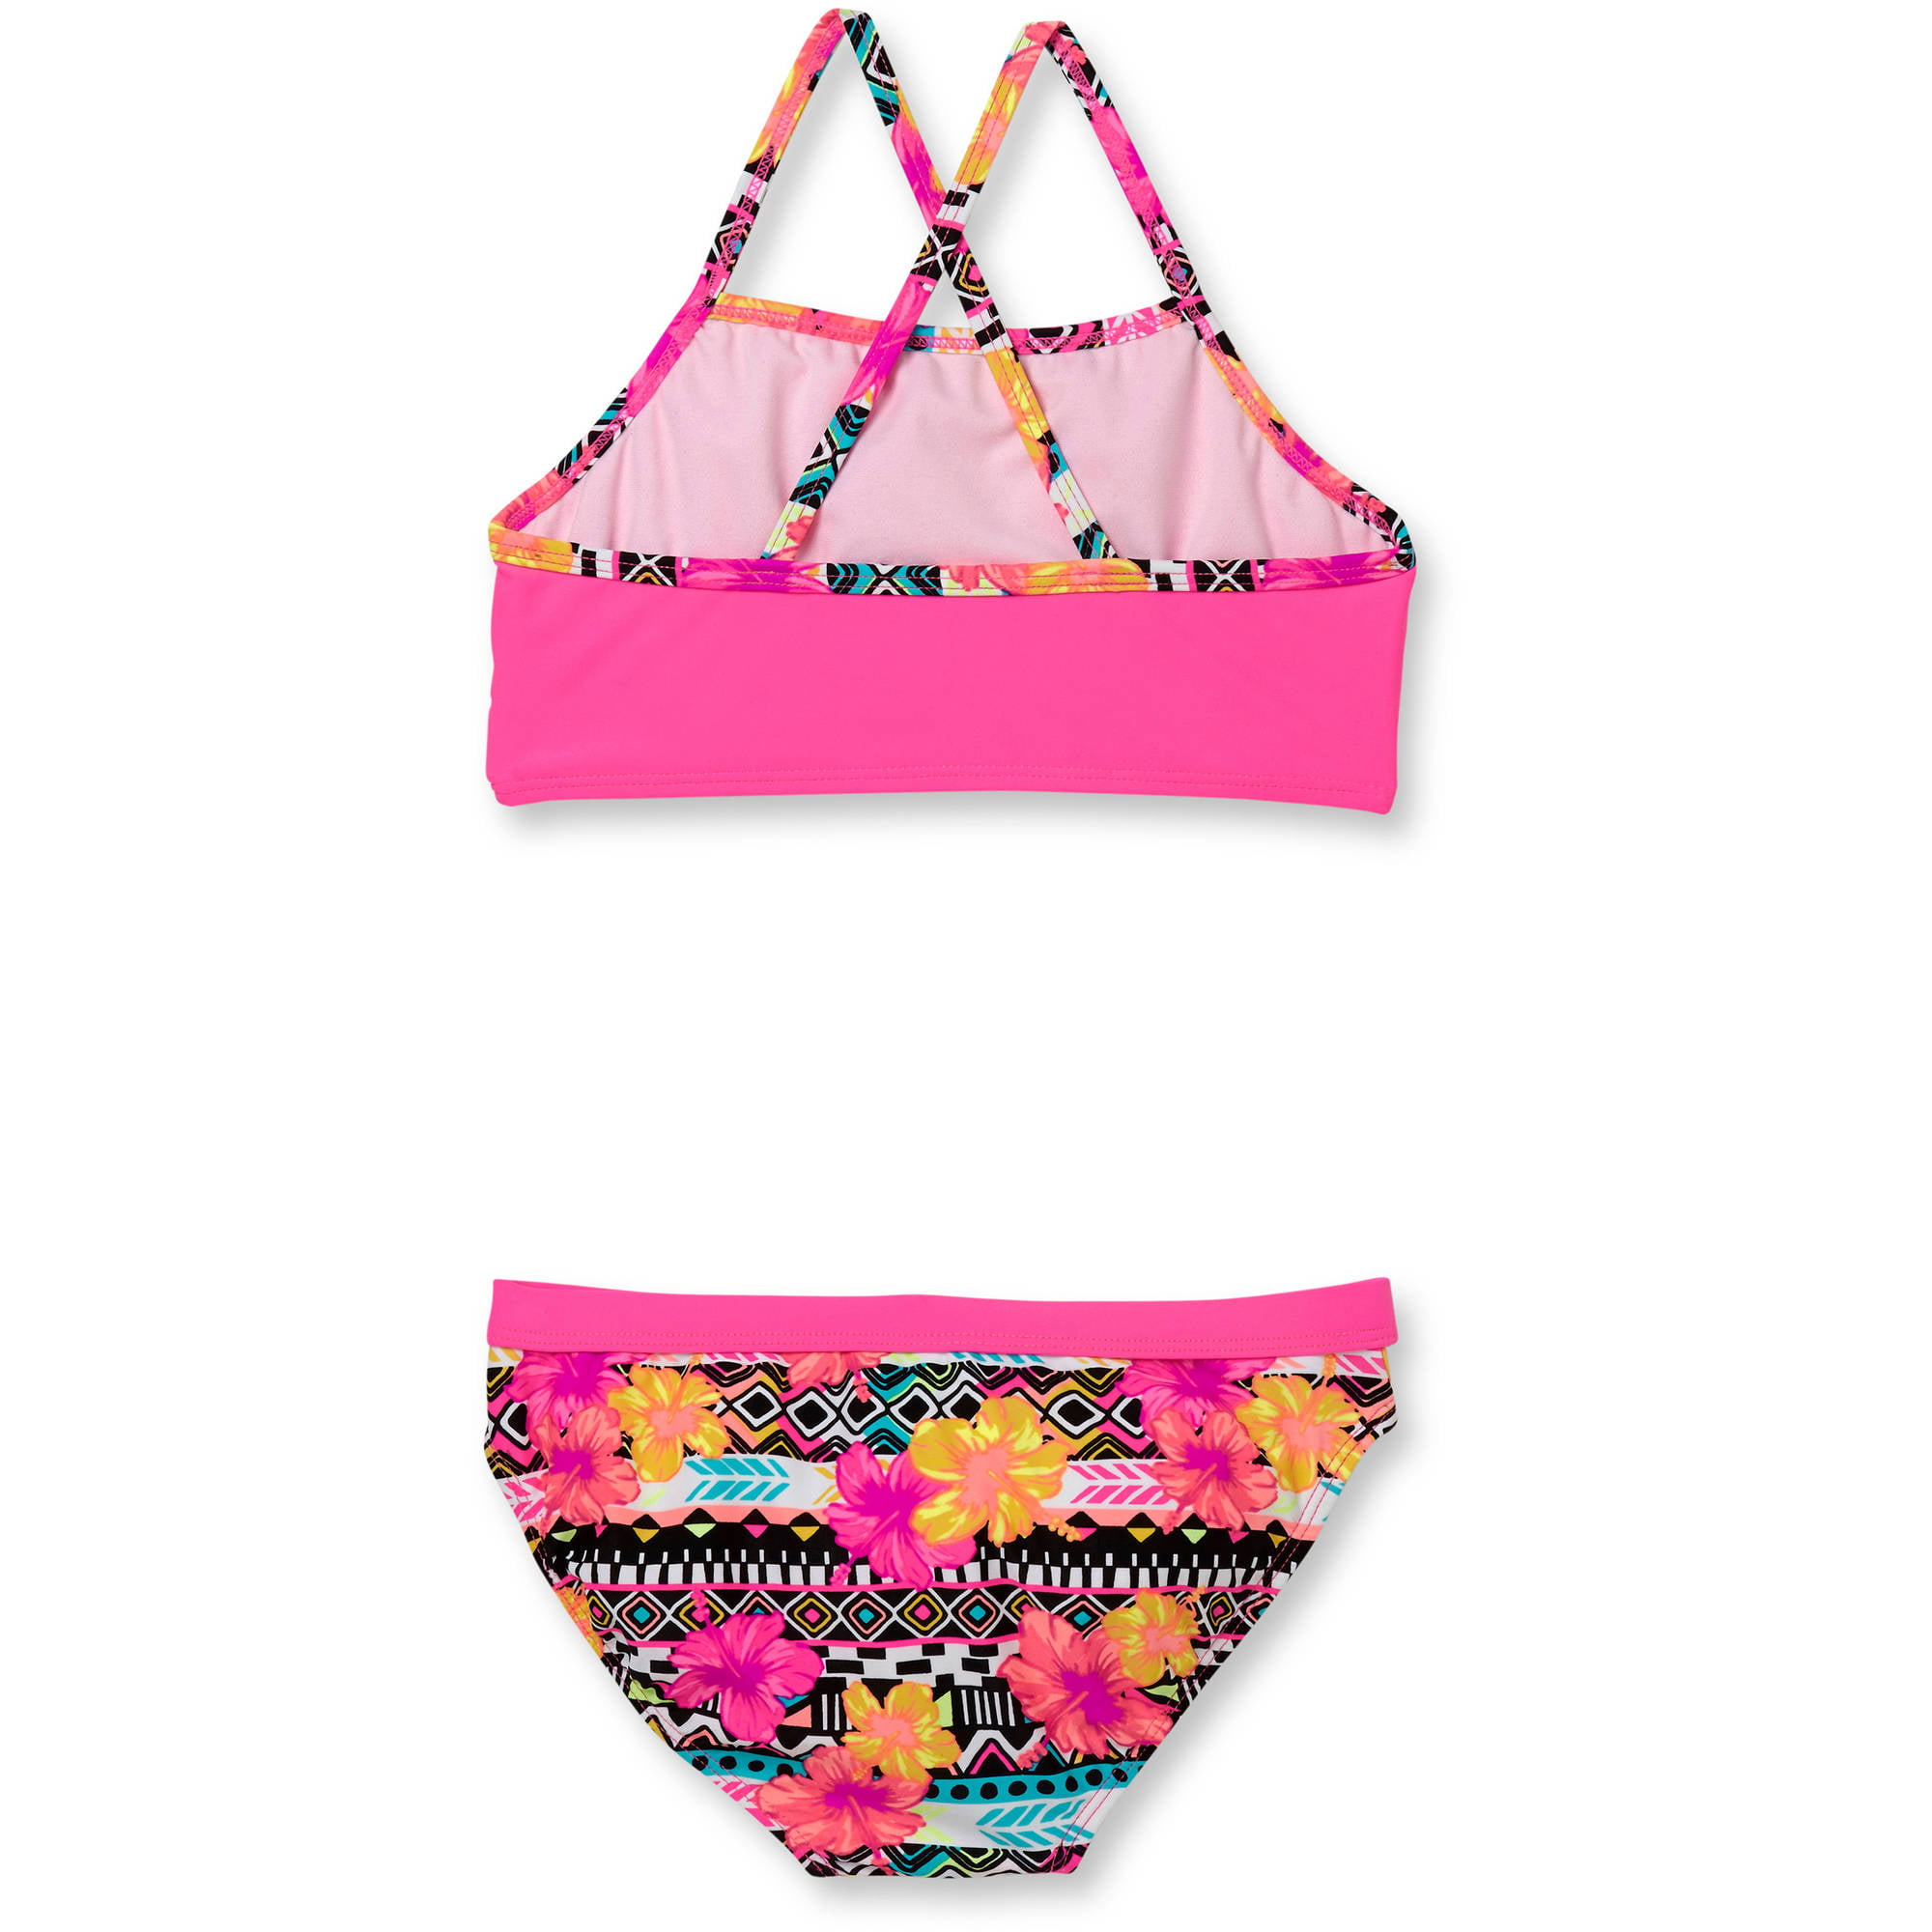 Teen Girls Paradise Check - Two Piece Trilet Bikini Set For Girls